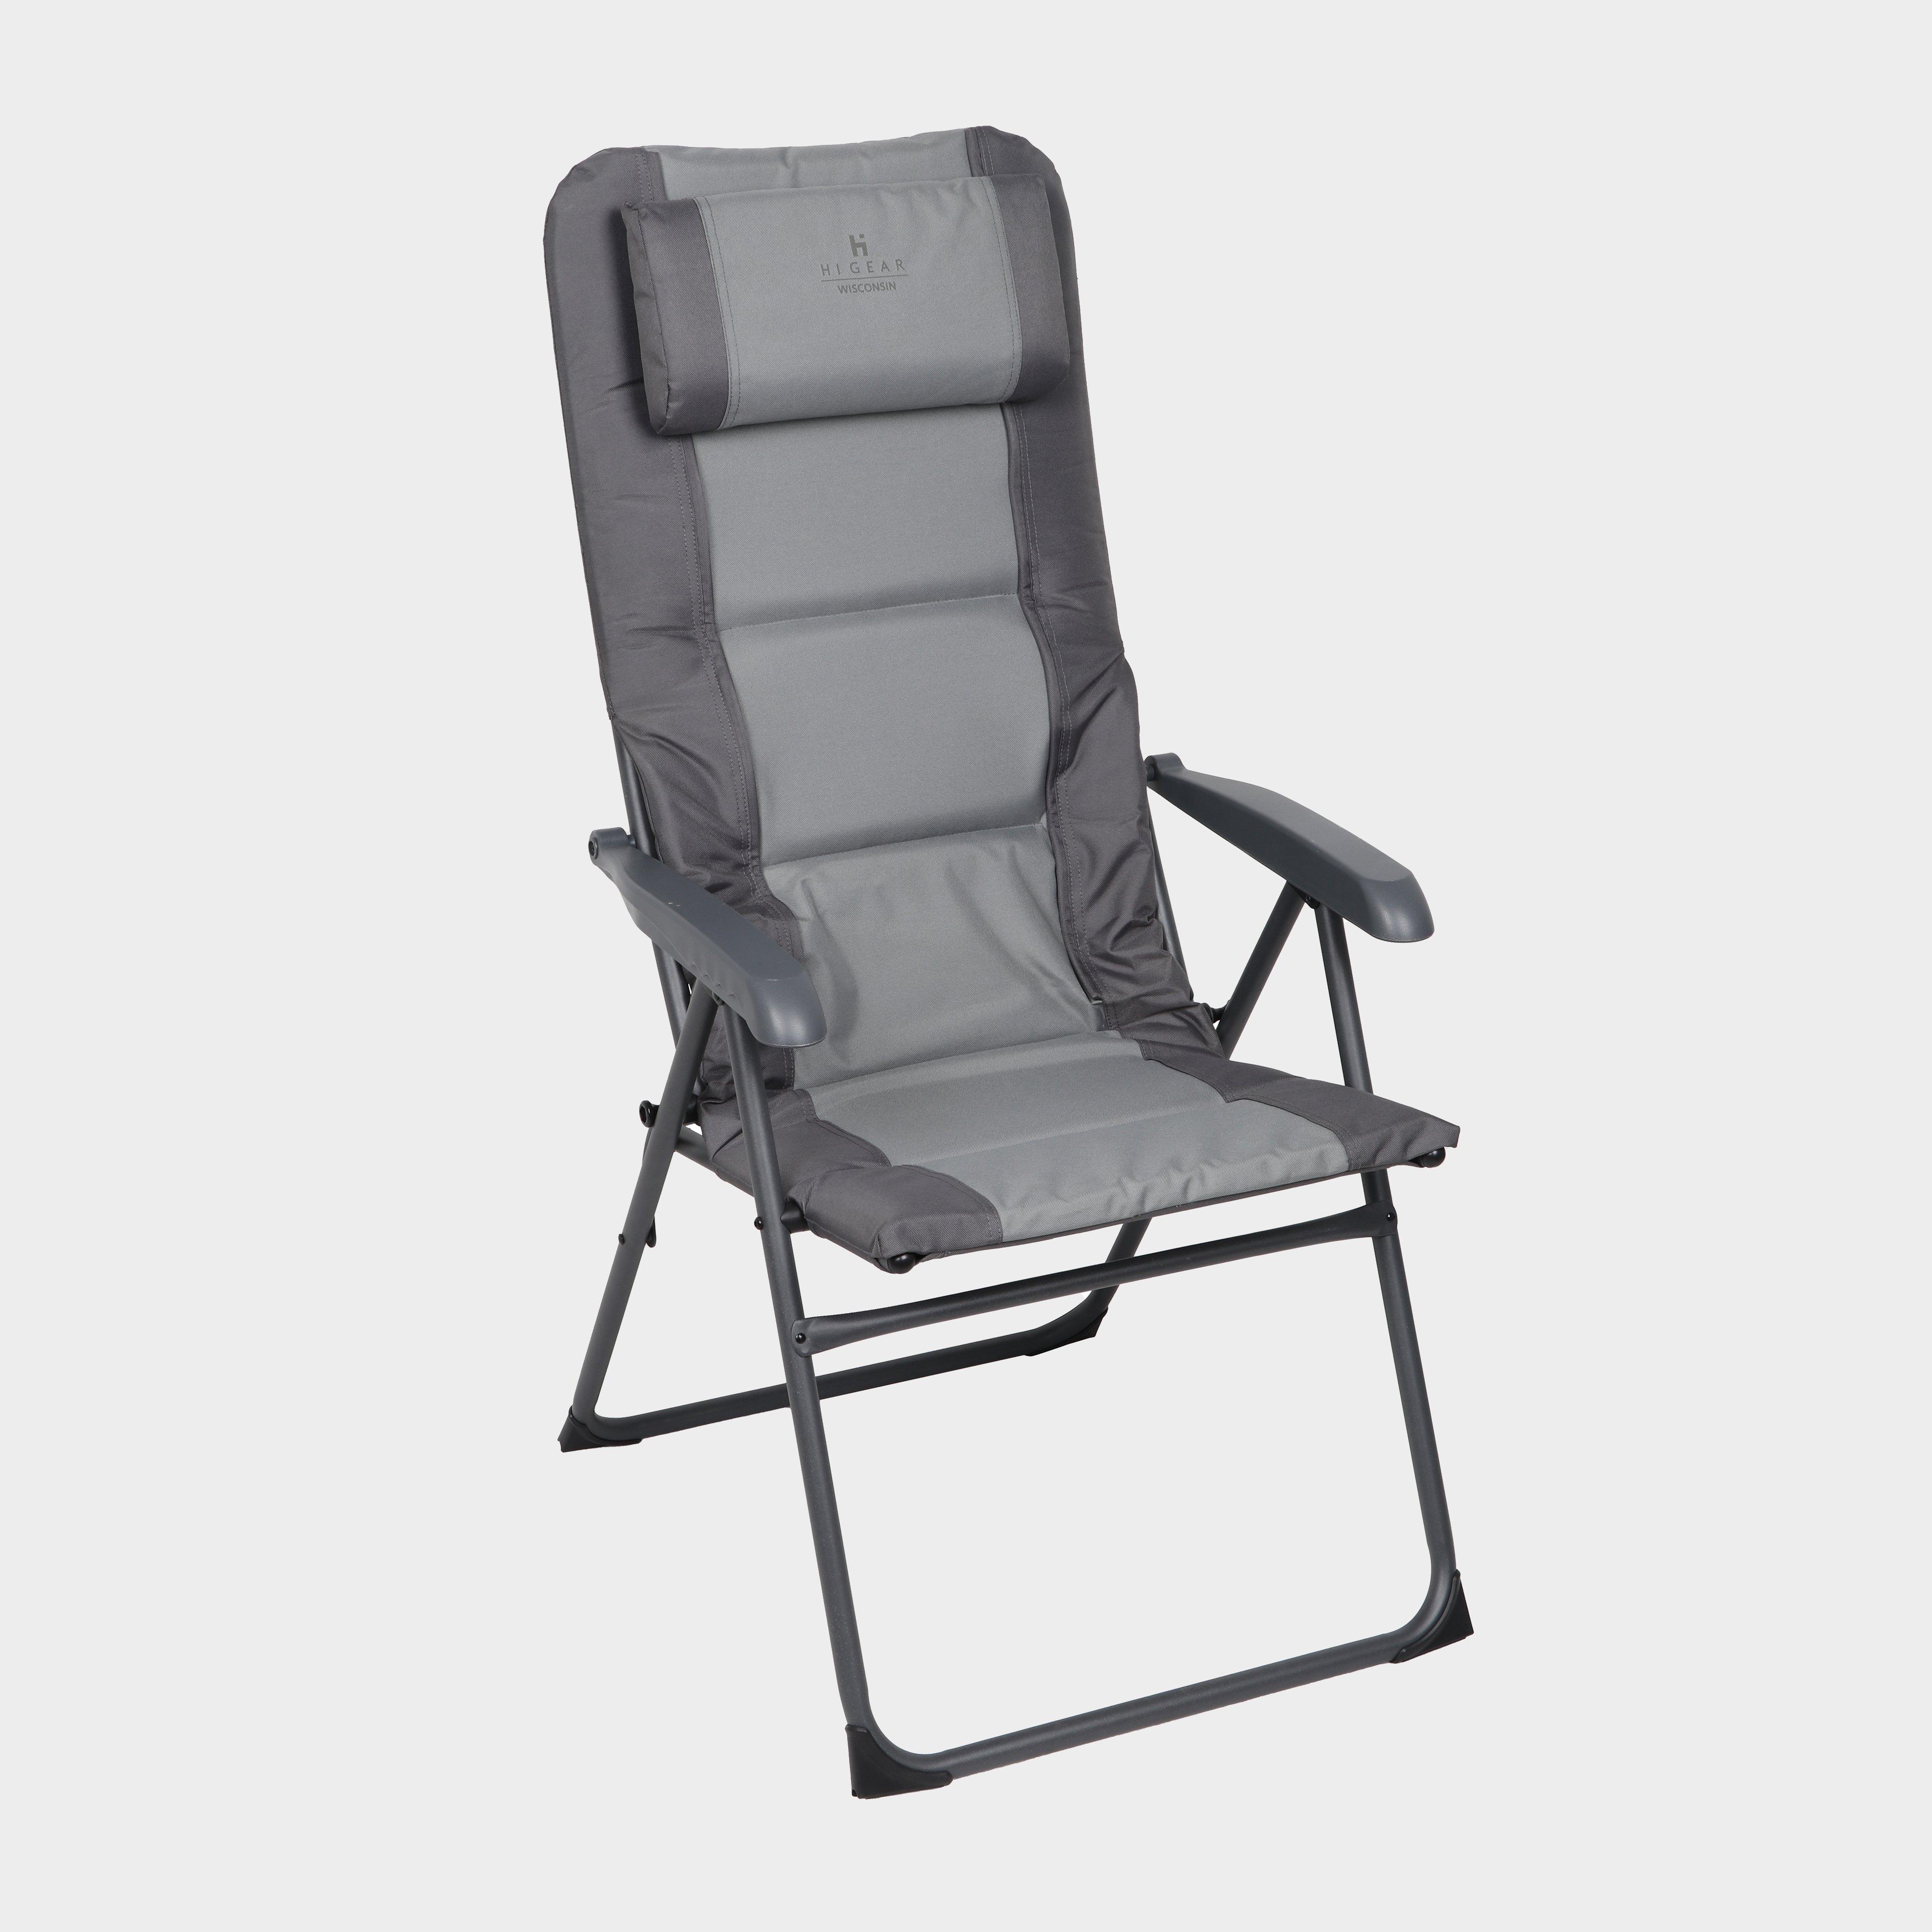 Hi-Gear Hi-Gear Wisconsin Folding Camping Chair - Grey, Grey